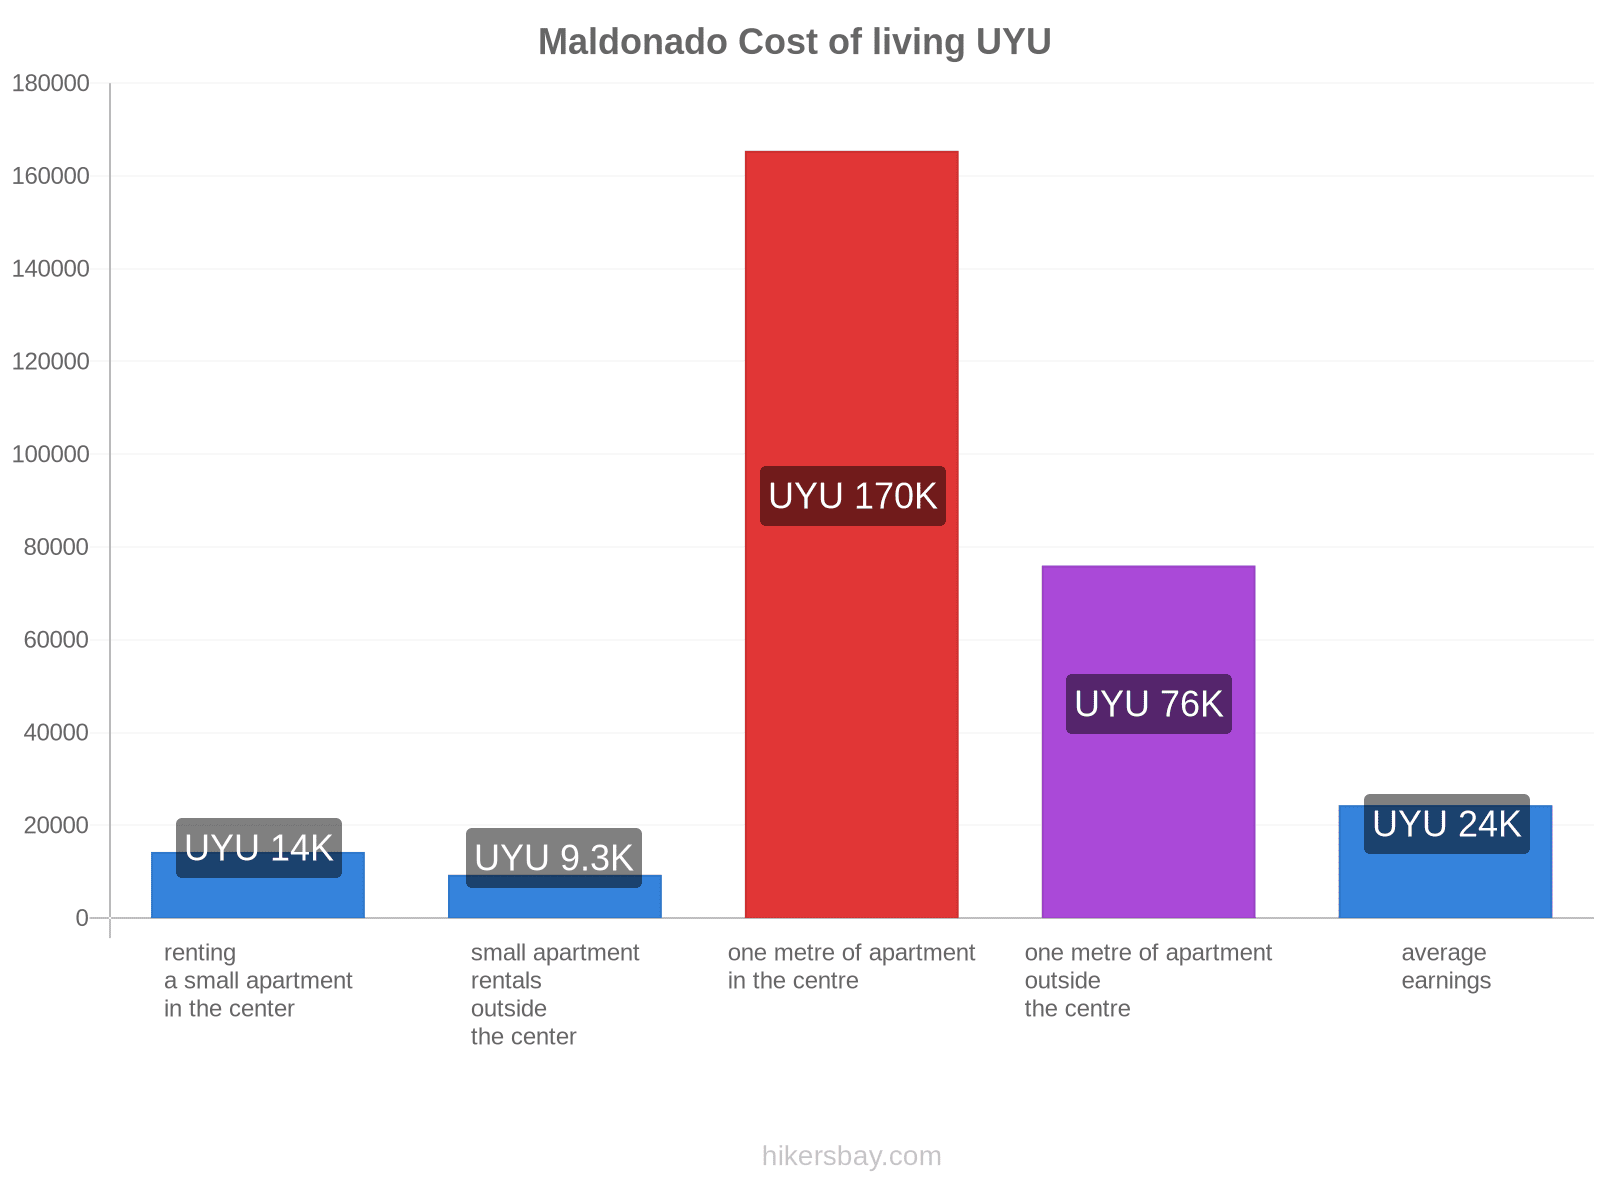 Maldonado cost of living hikersbay.com